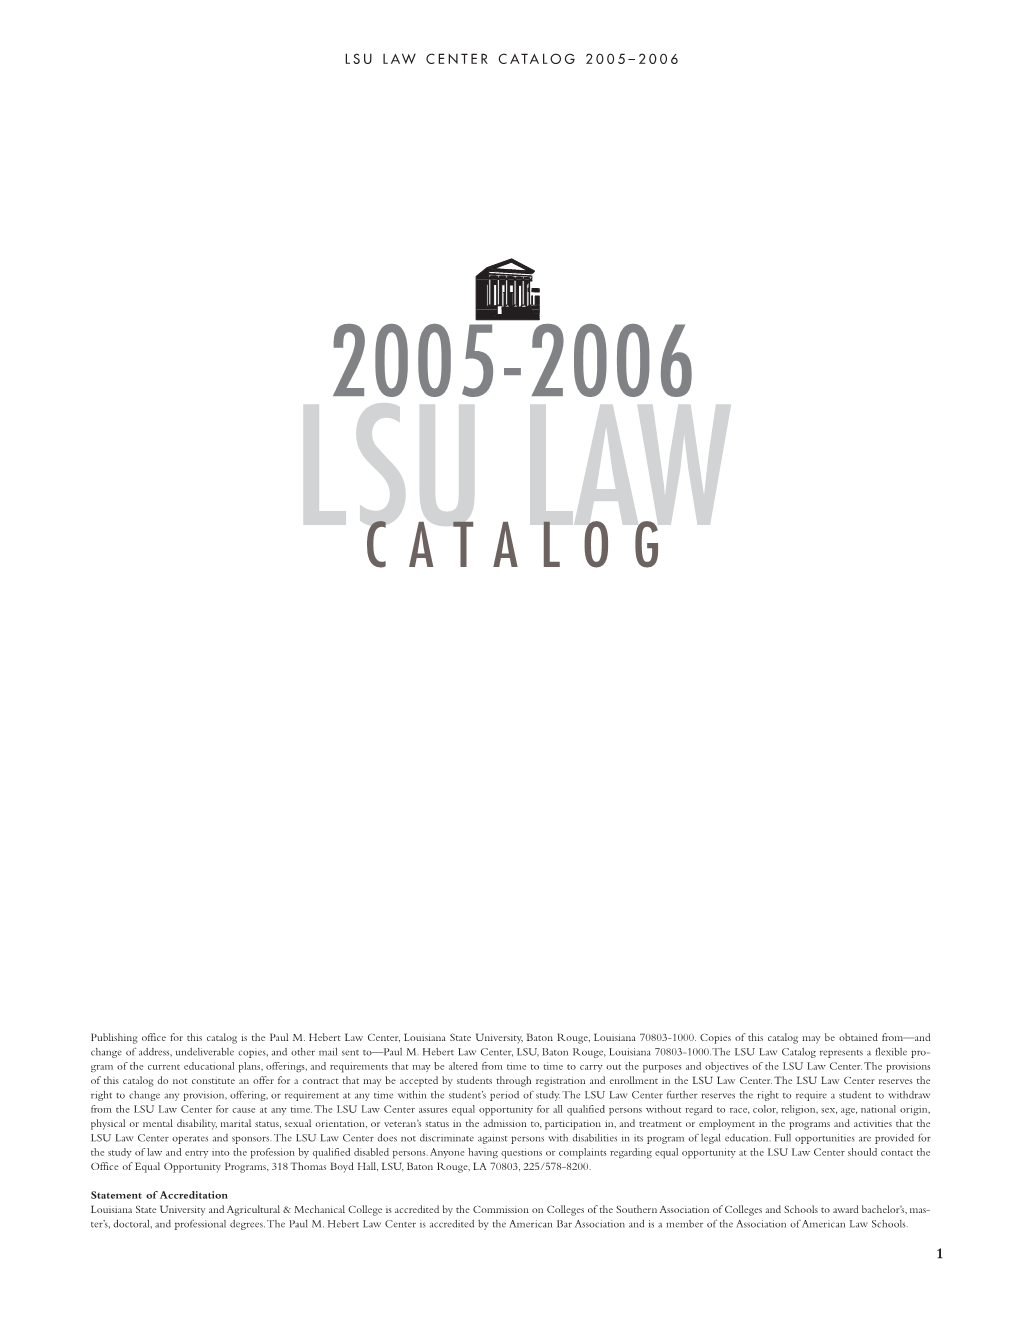 The 2005-2006 LSU Law Catalog